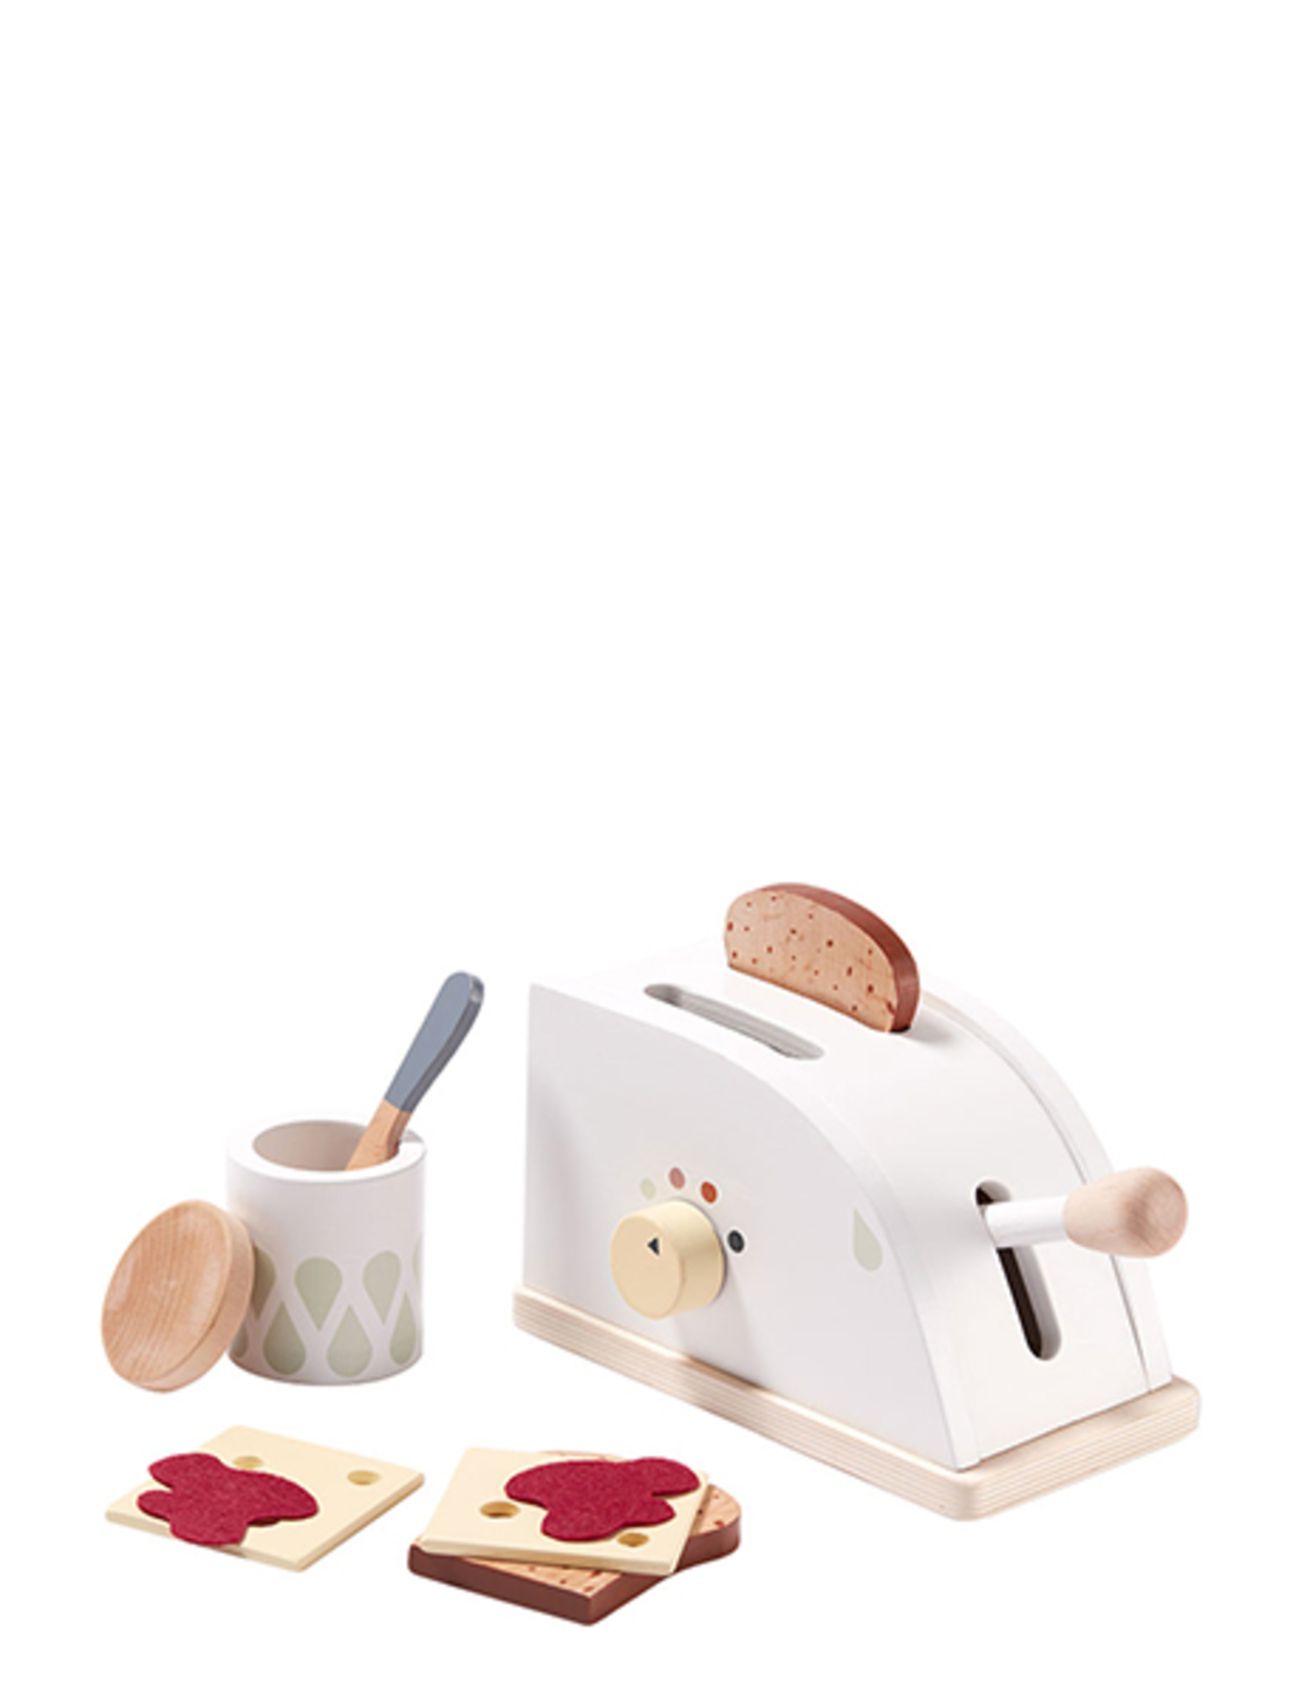 Toaster Bistro Toys Toy Kitchen & Accessories Toy Kitchen Accessories Multi/patterned Kid's Concept